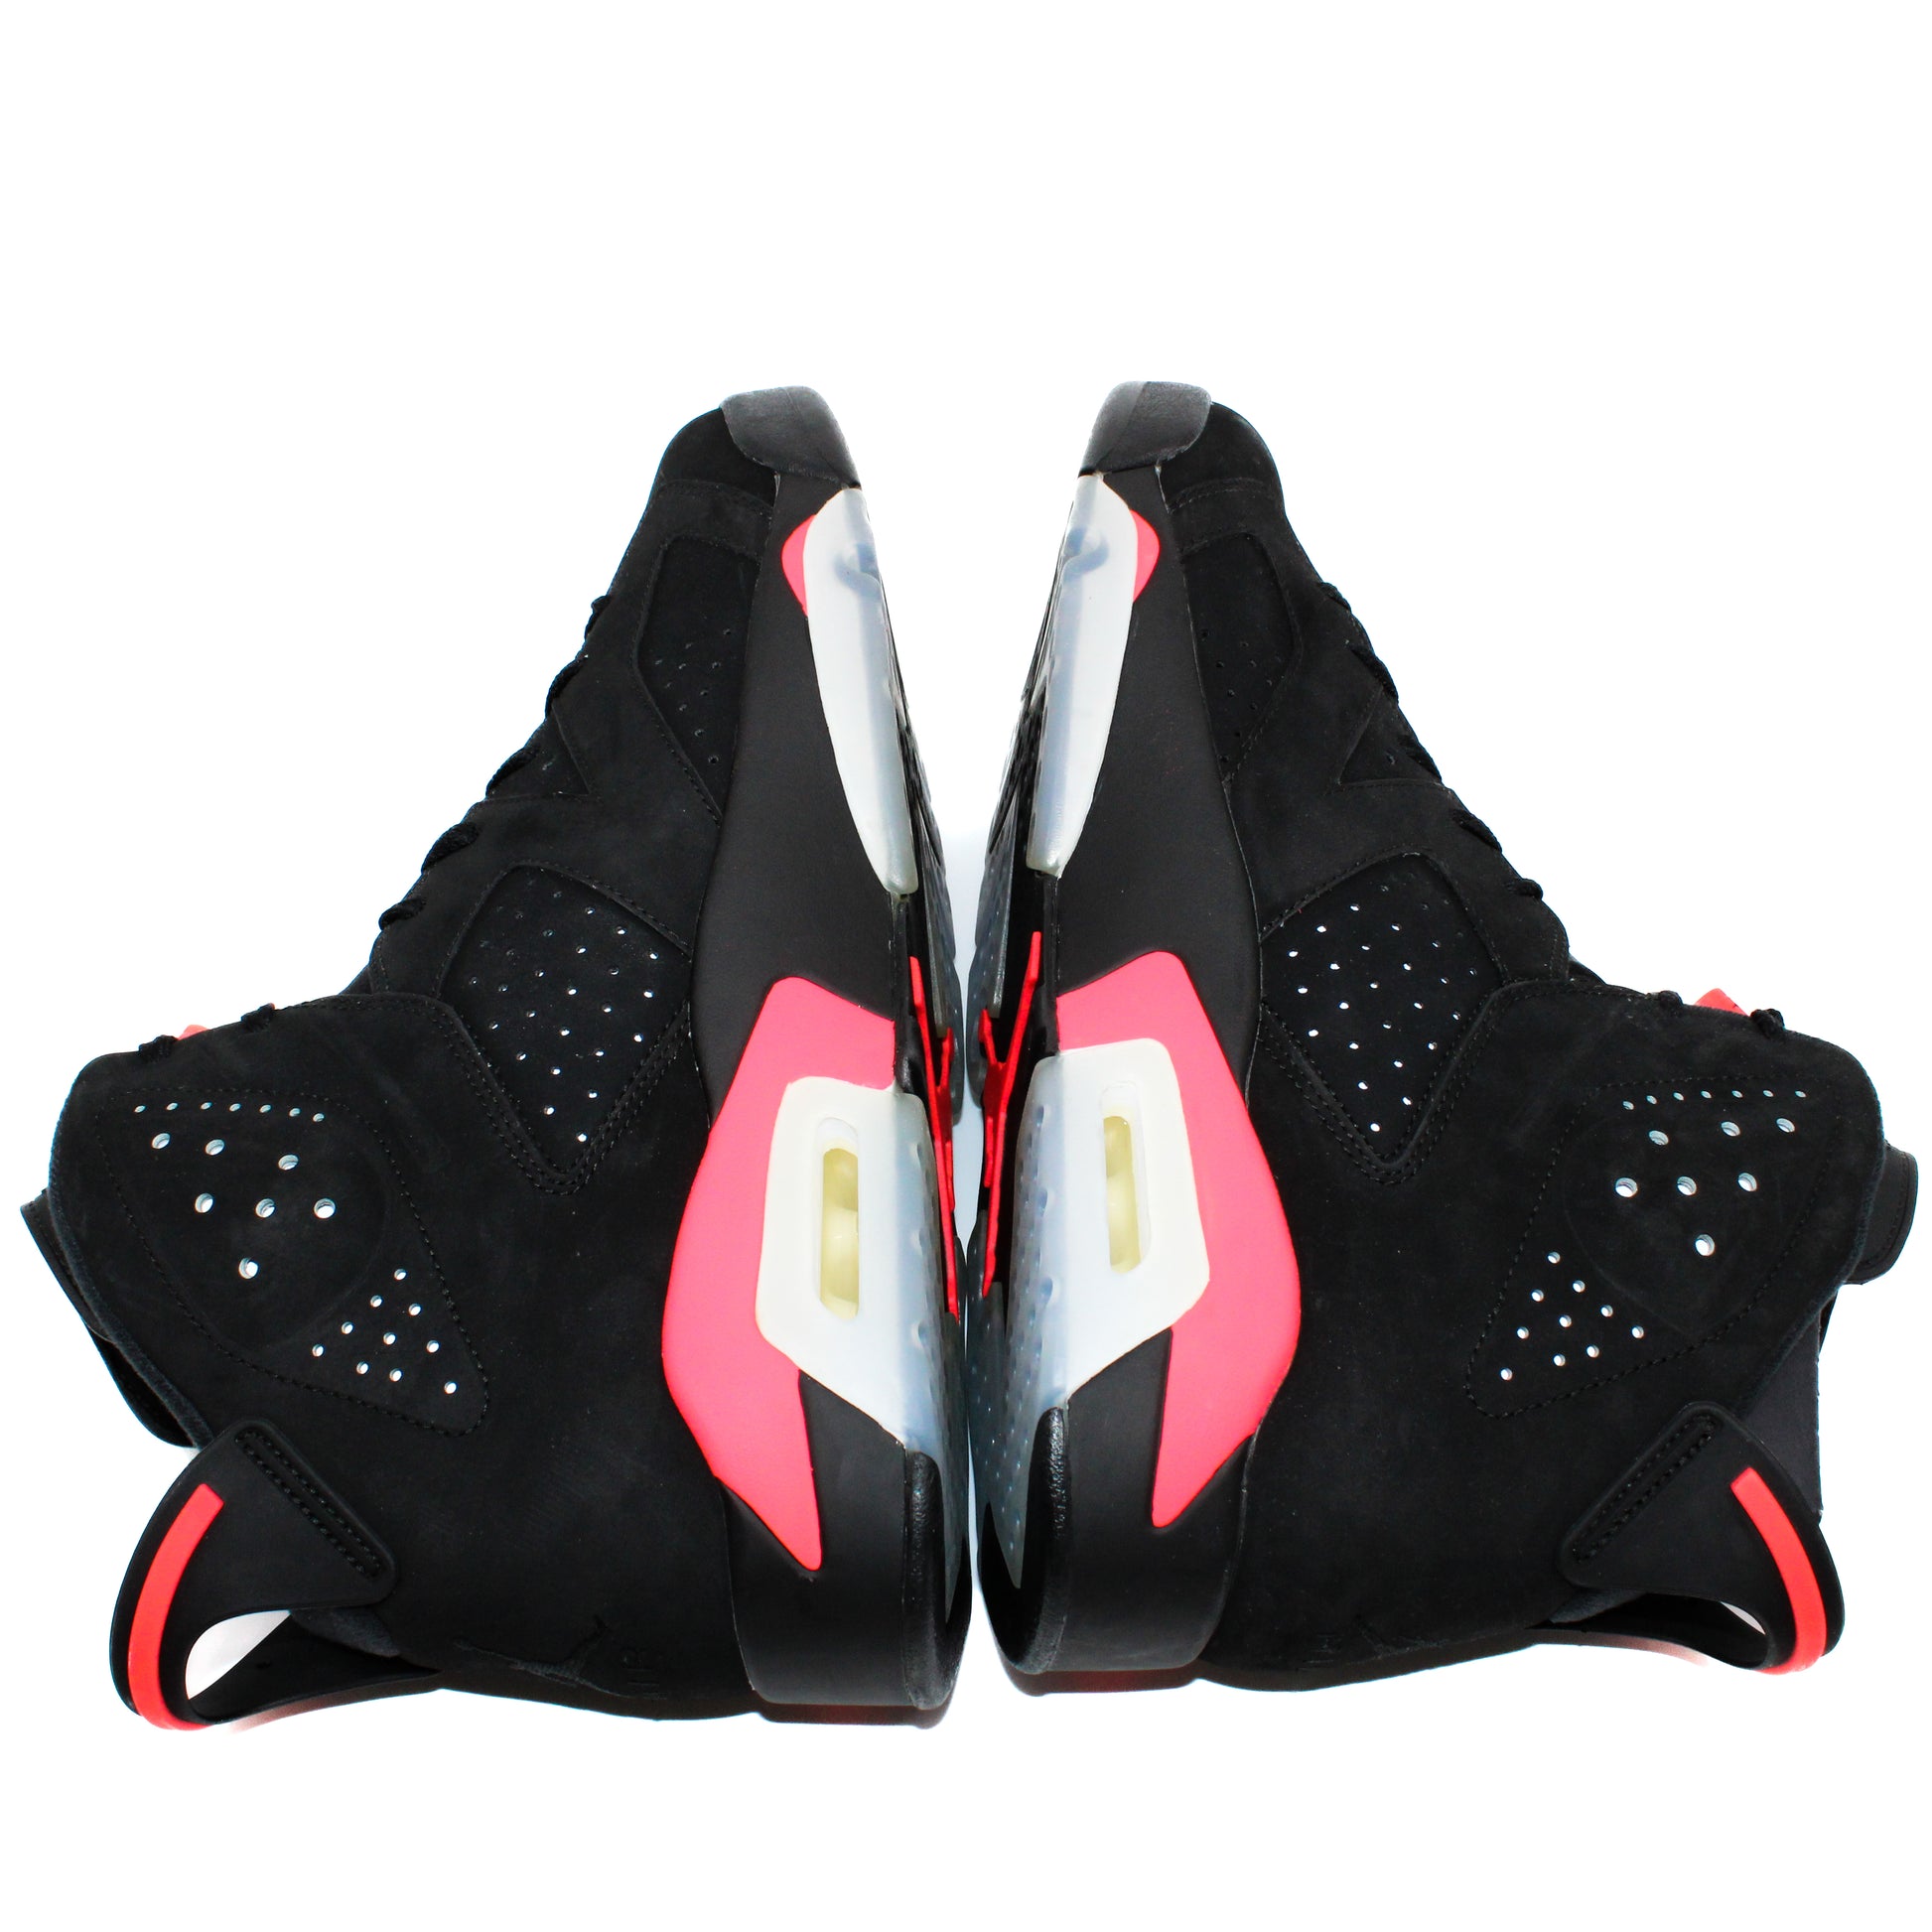 S1908 Air Jordan 6 Retro Infrared Black 2014 384664-060 (3).jpg